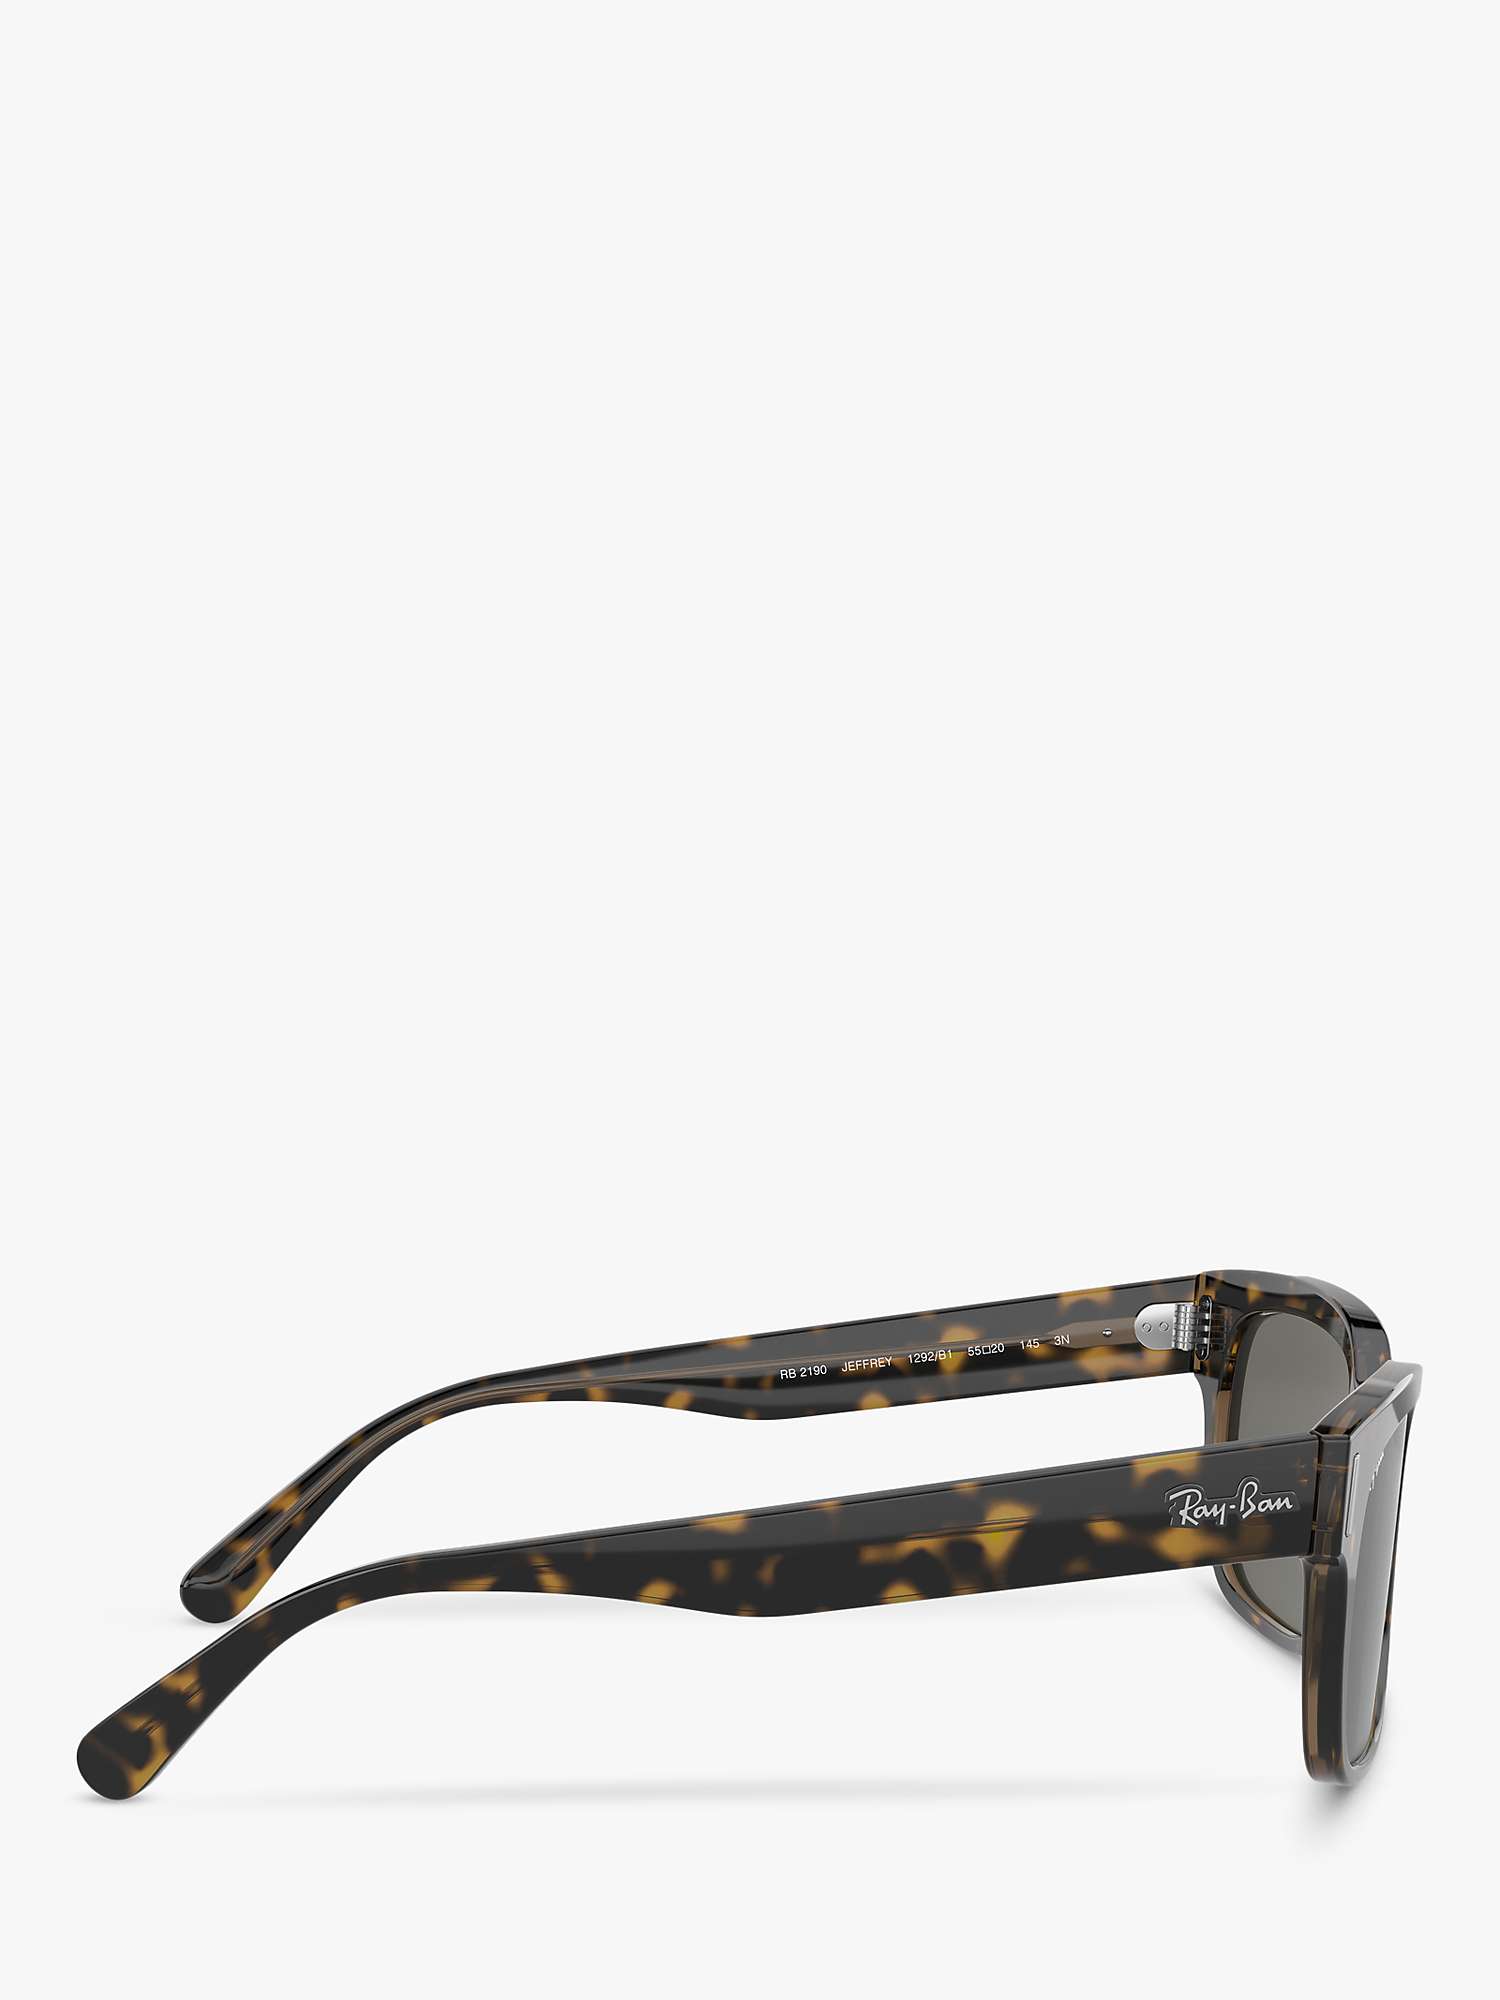 Buy Ray-Ban RB2190 Men's Square Sunglasses, Havana/Black Online at johnlewis.com